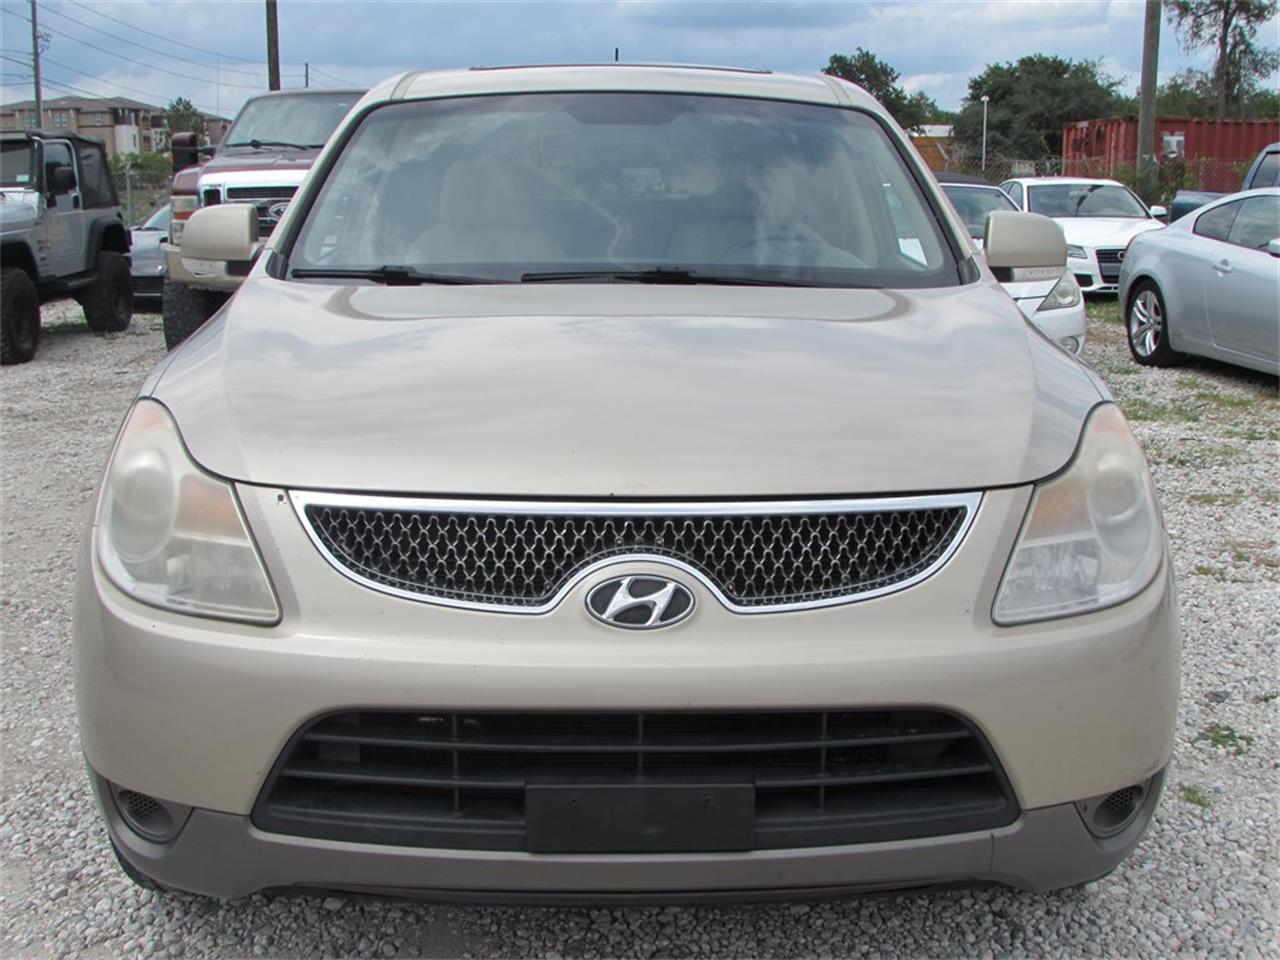 2009 Hyundai Veracruz for sale in Orlando, FL – photo 2